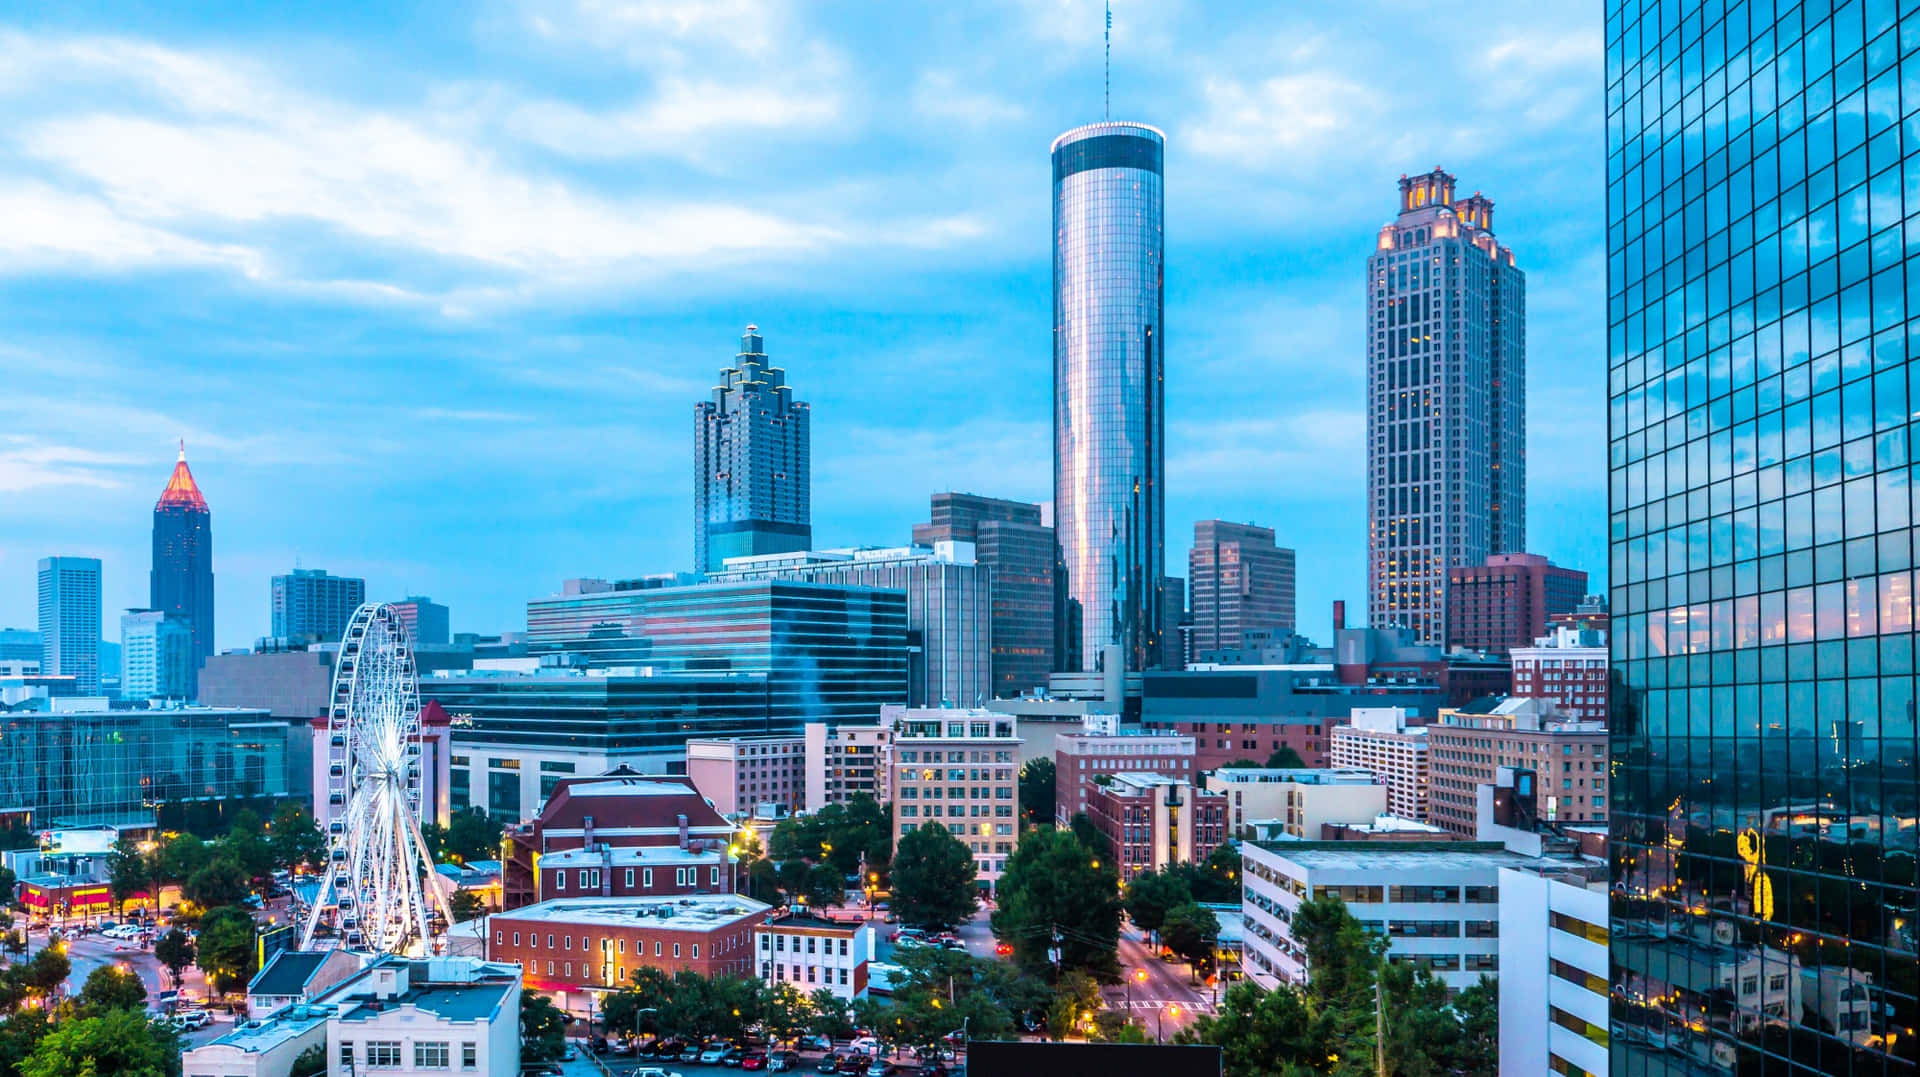 The illuminated skyline of Atlanta Georgia reflecting off the Chattahoochee River